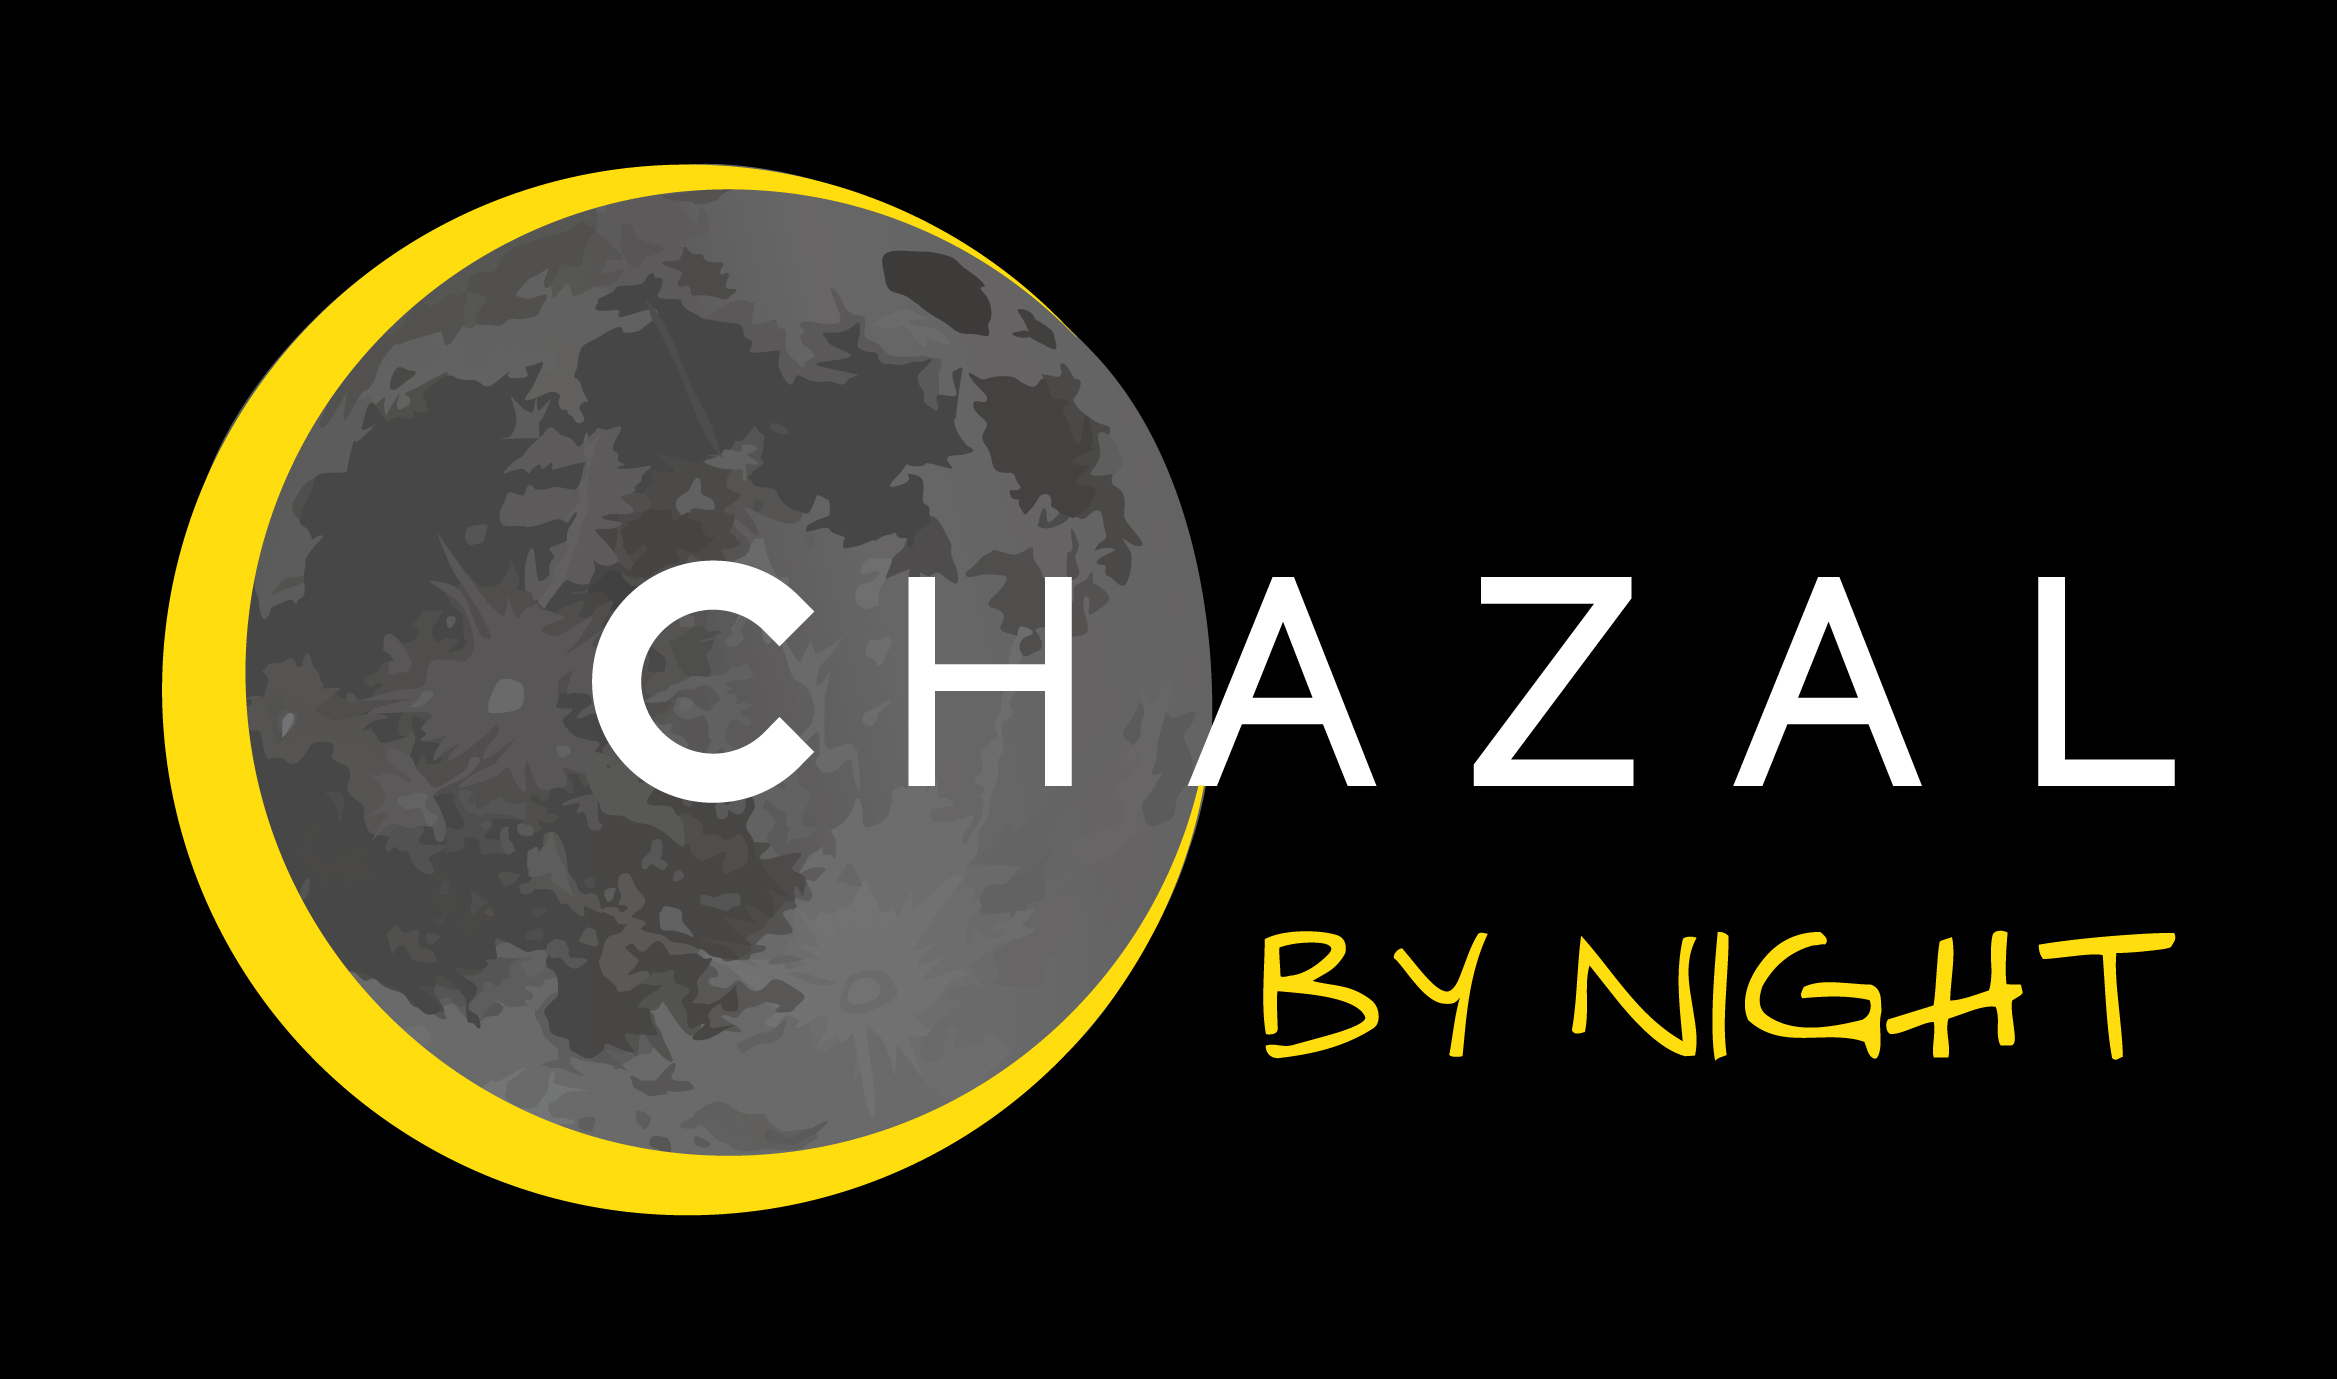 Chazal by Night